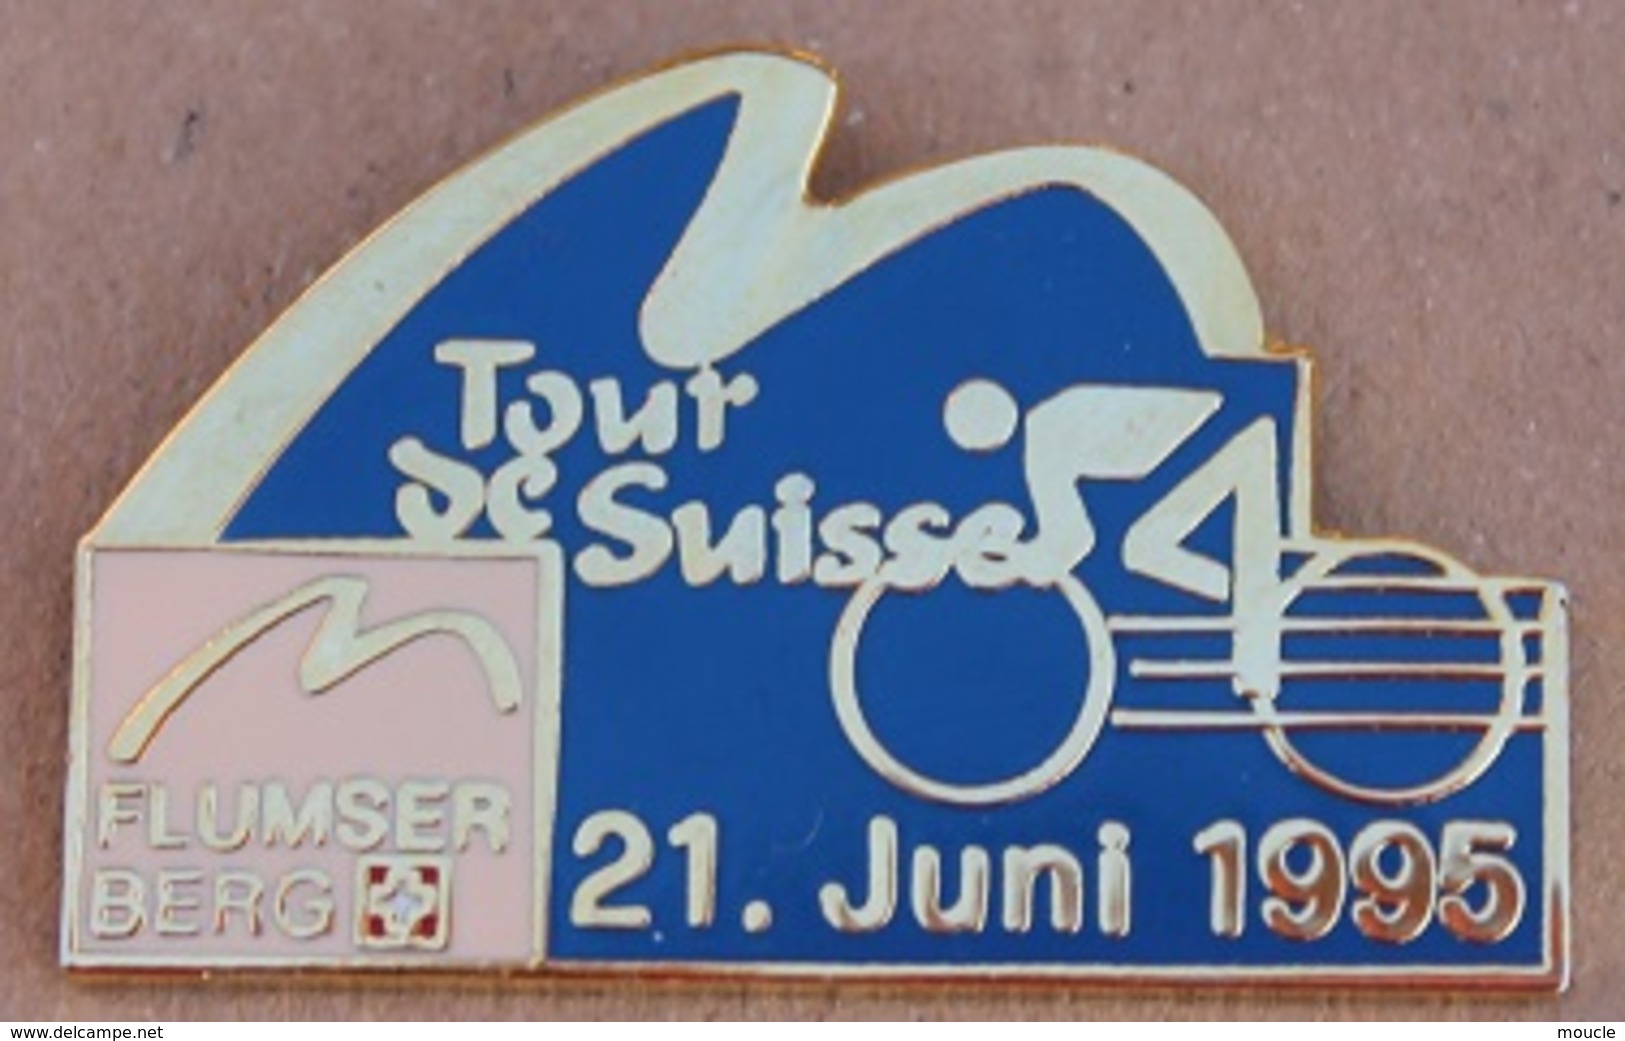 CYCLISME - VELO - CYCLISTE - TOUR DE SUISSE 21 JUNI 1995 - FLUMSER BERG  -      (16) - Ciclismo